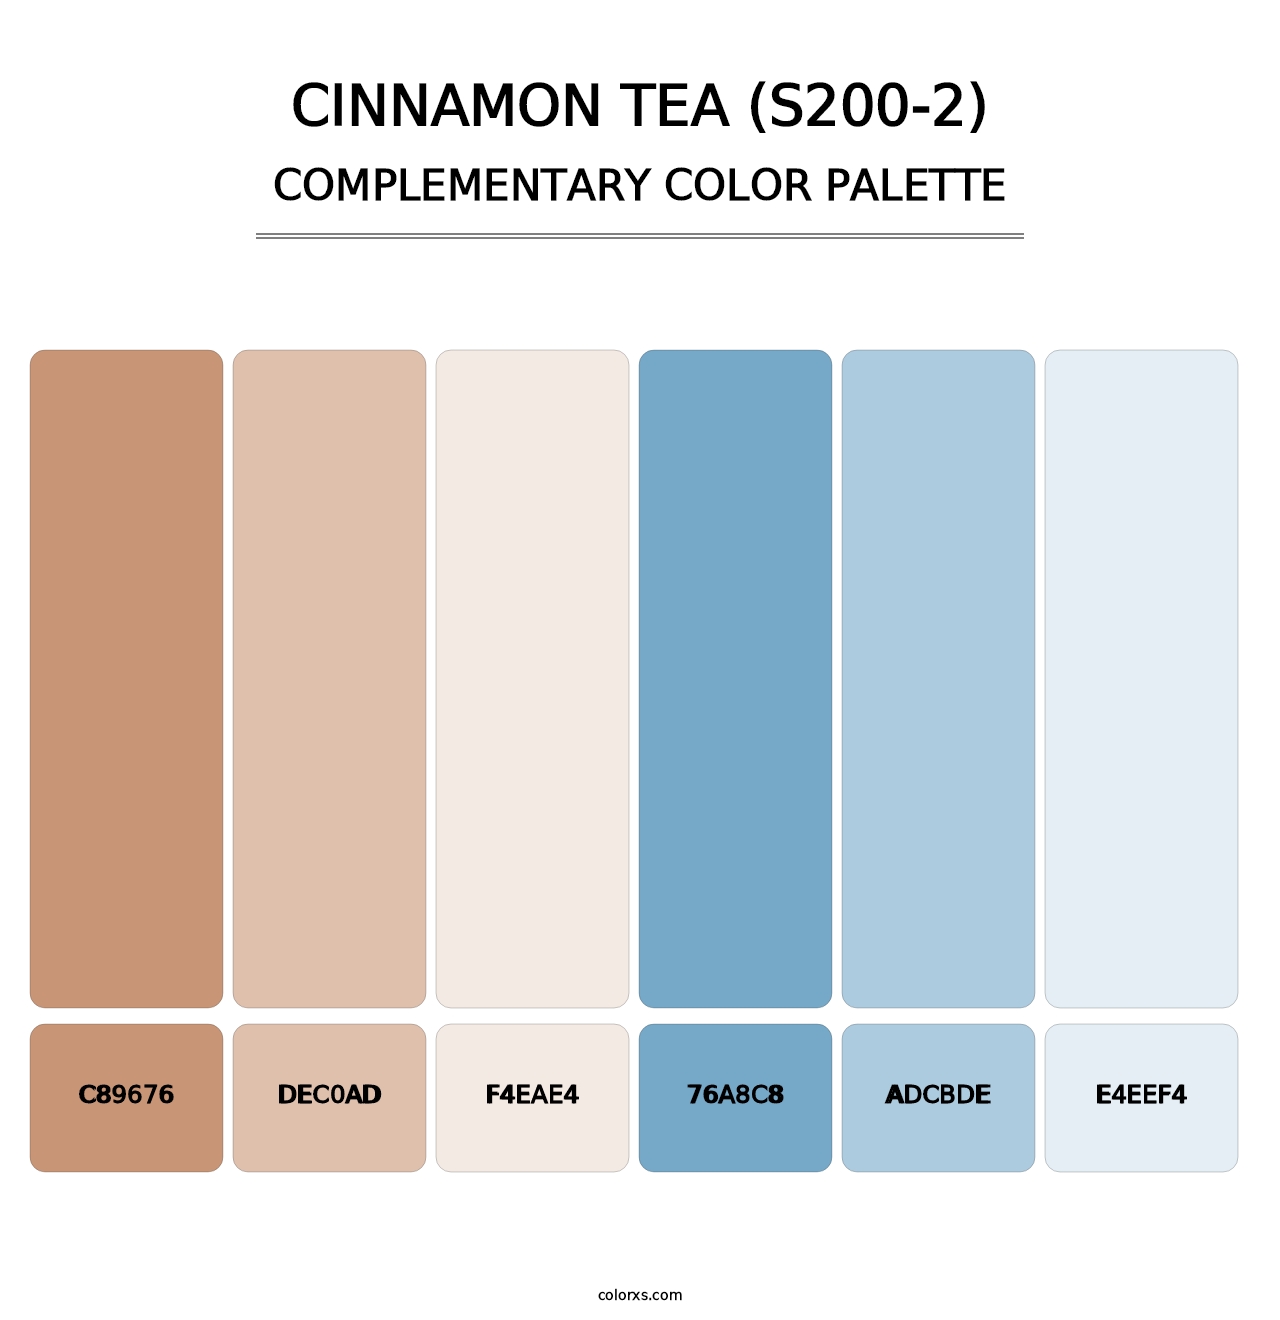 Cinnamon Tea (S200-2) - Complementary Color Palette